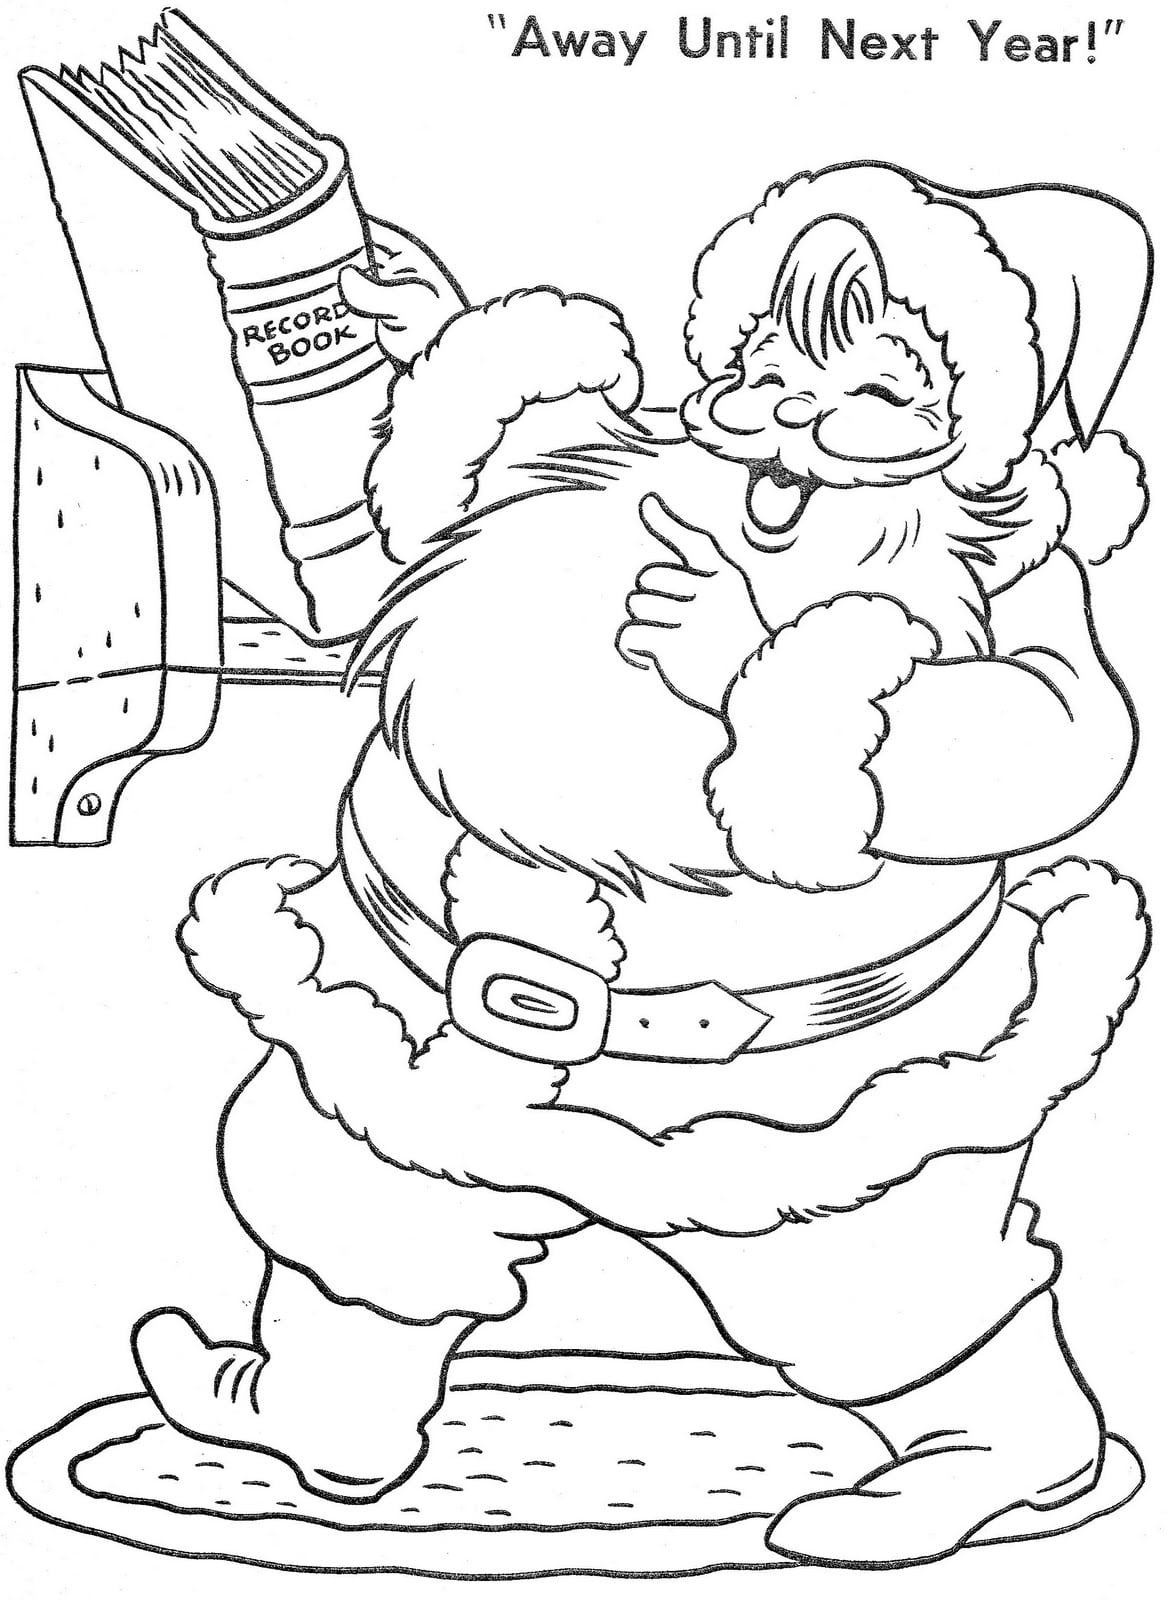 Desenhos De Papai Noel Para Colorir E Imprimir